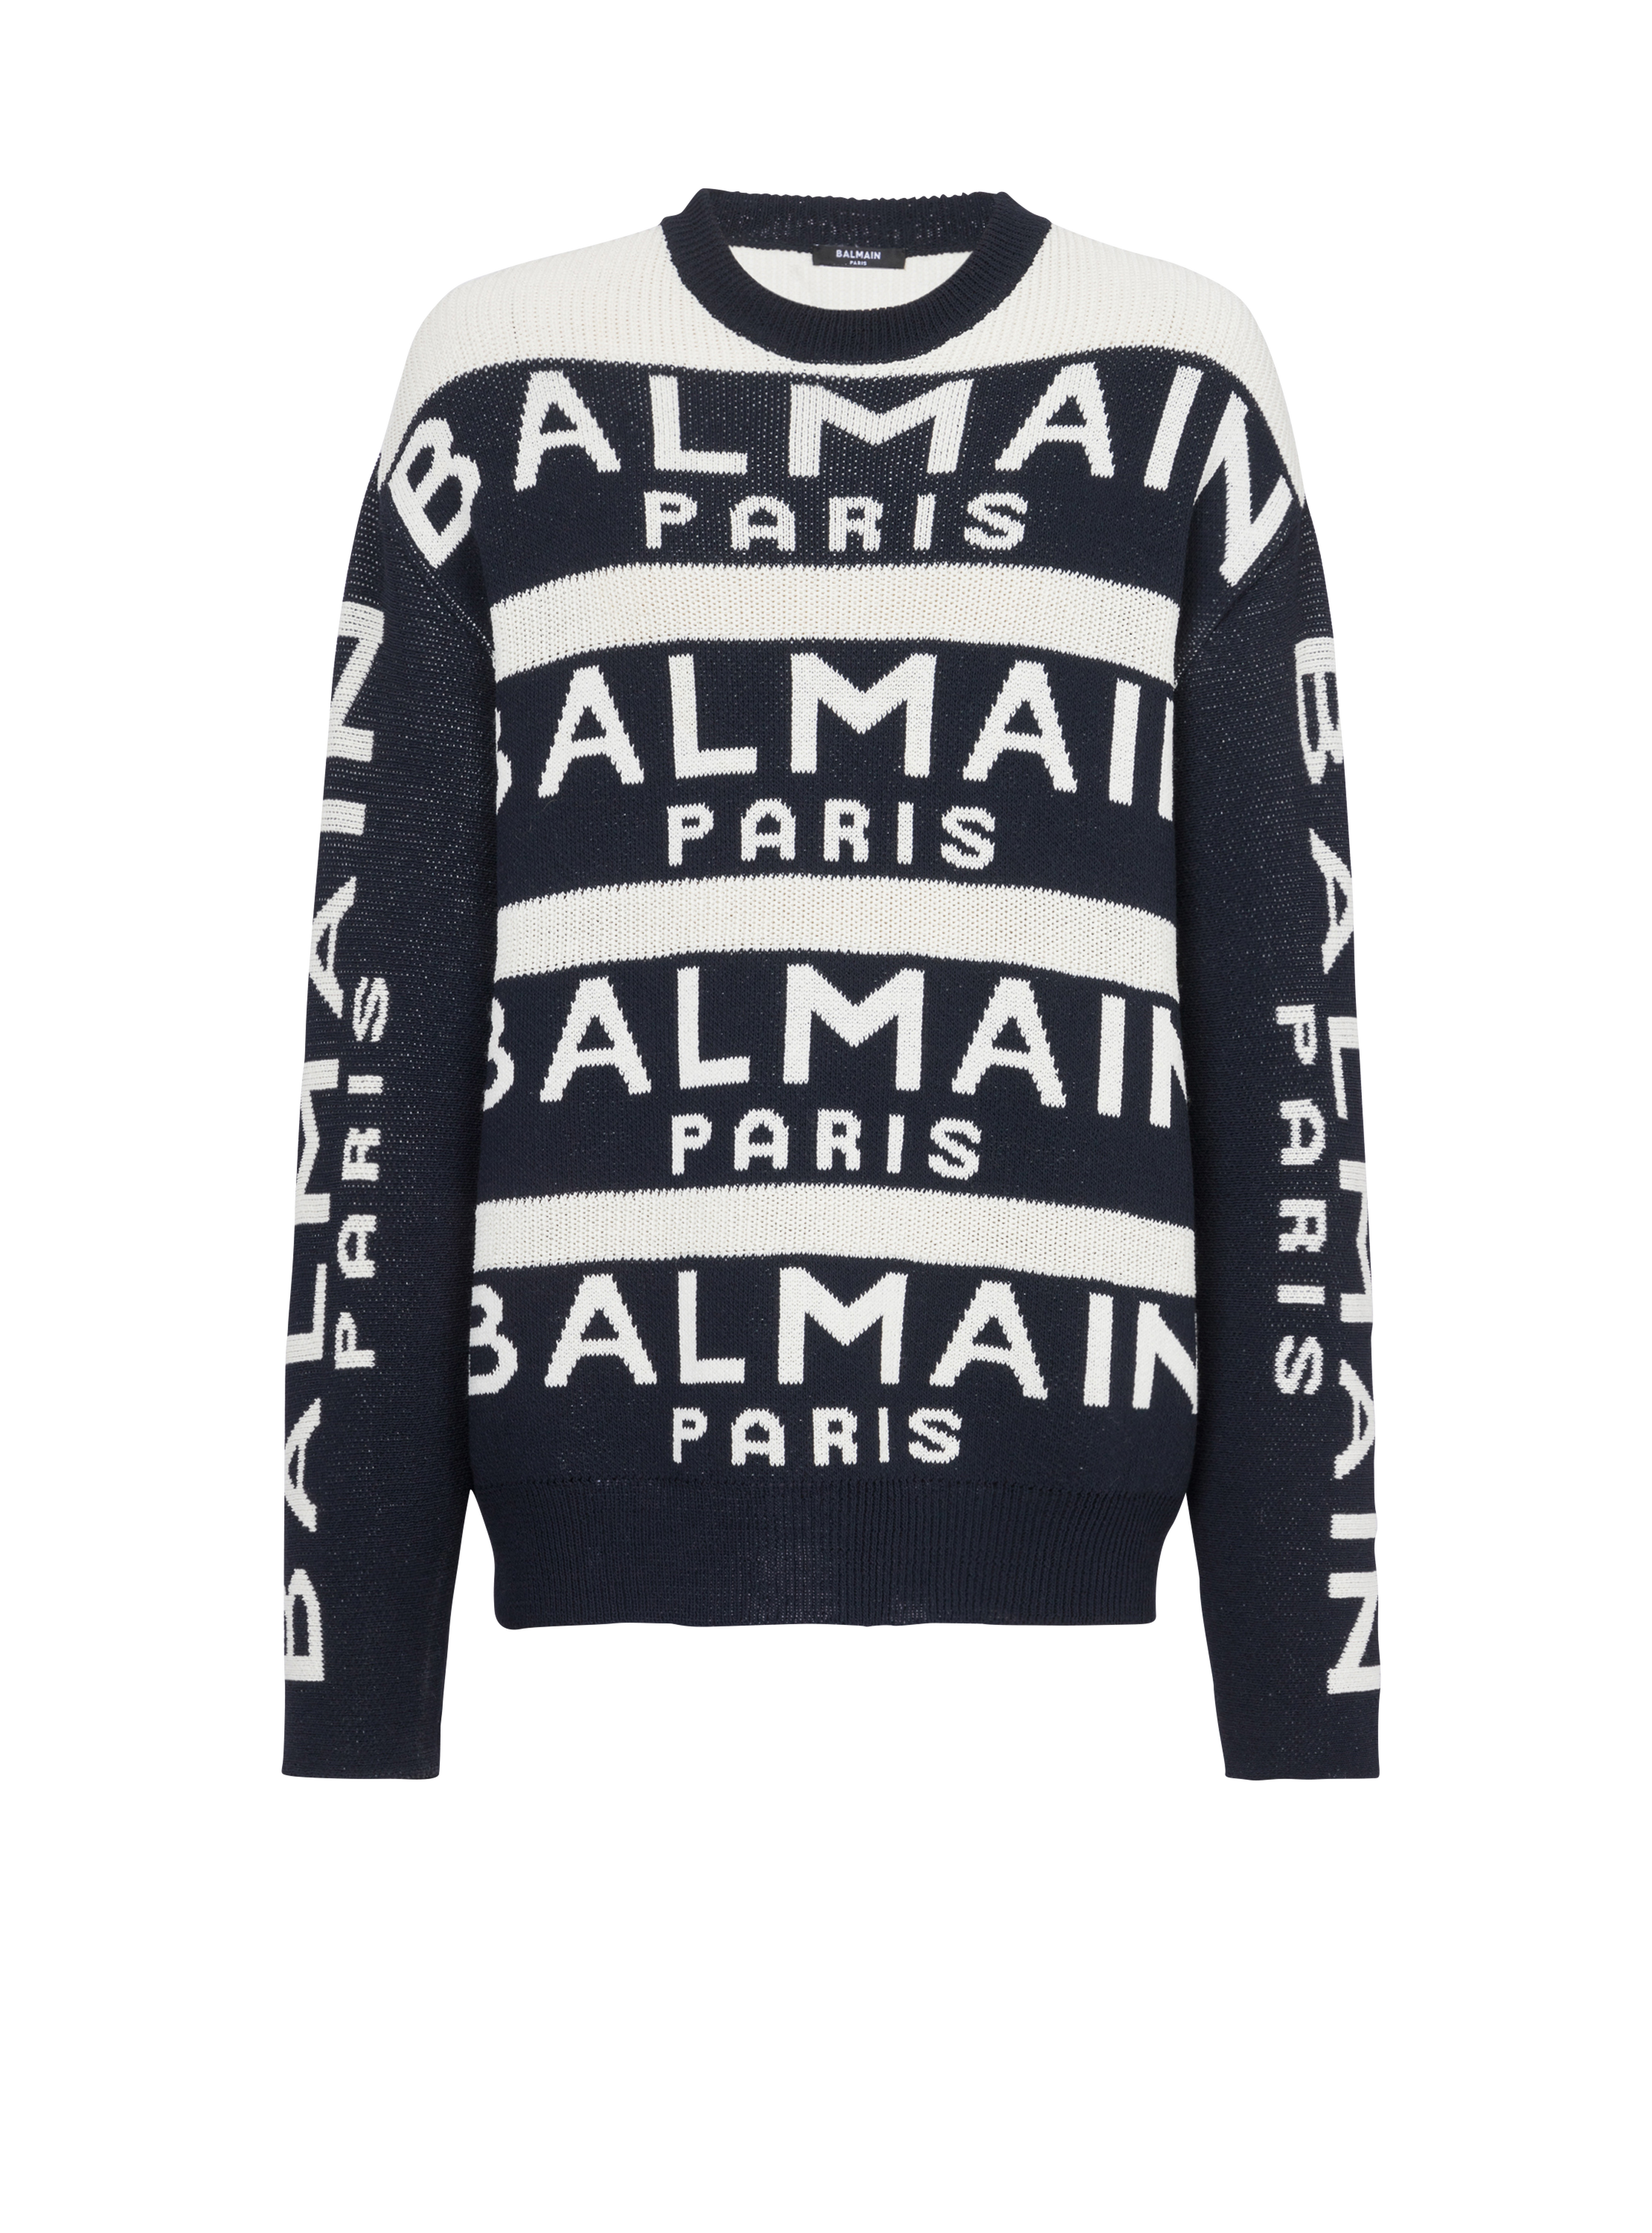 Balmain Paris 로고 자수 디테일 스웨터, black